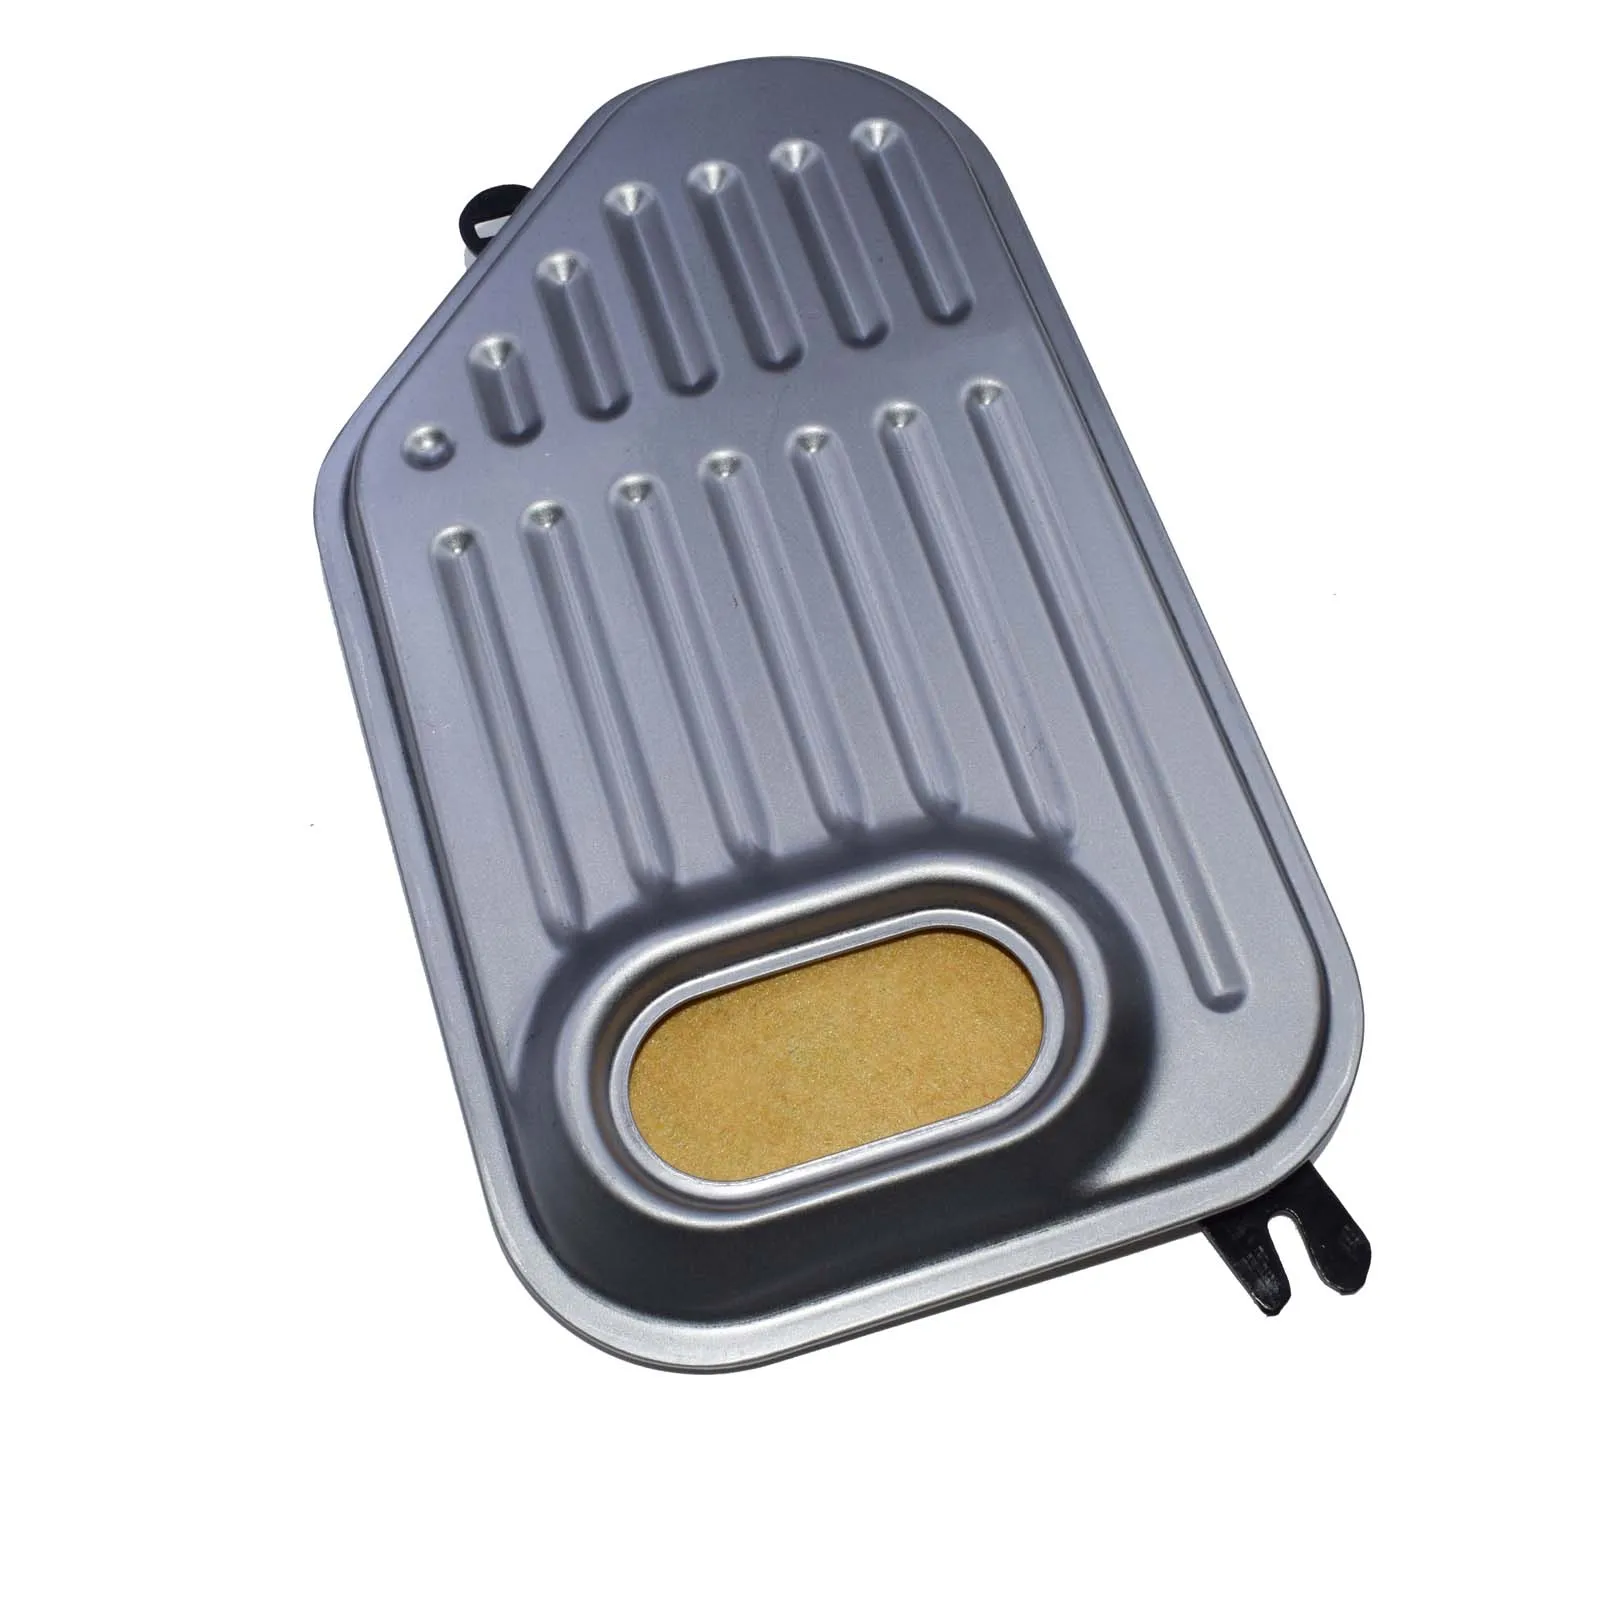 ISANCE фильтр автоматической передачи и прокладки для BMW E46 E39 VW Passat Audi A4 A6 A8 OE